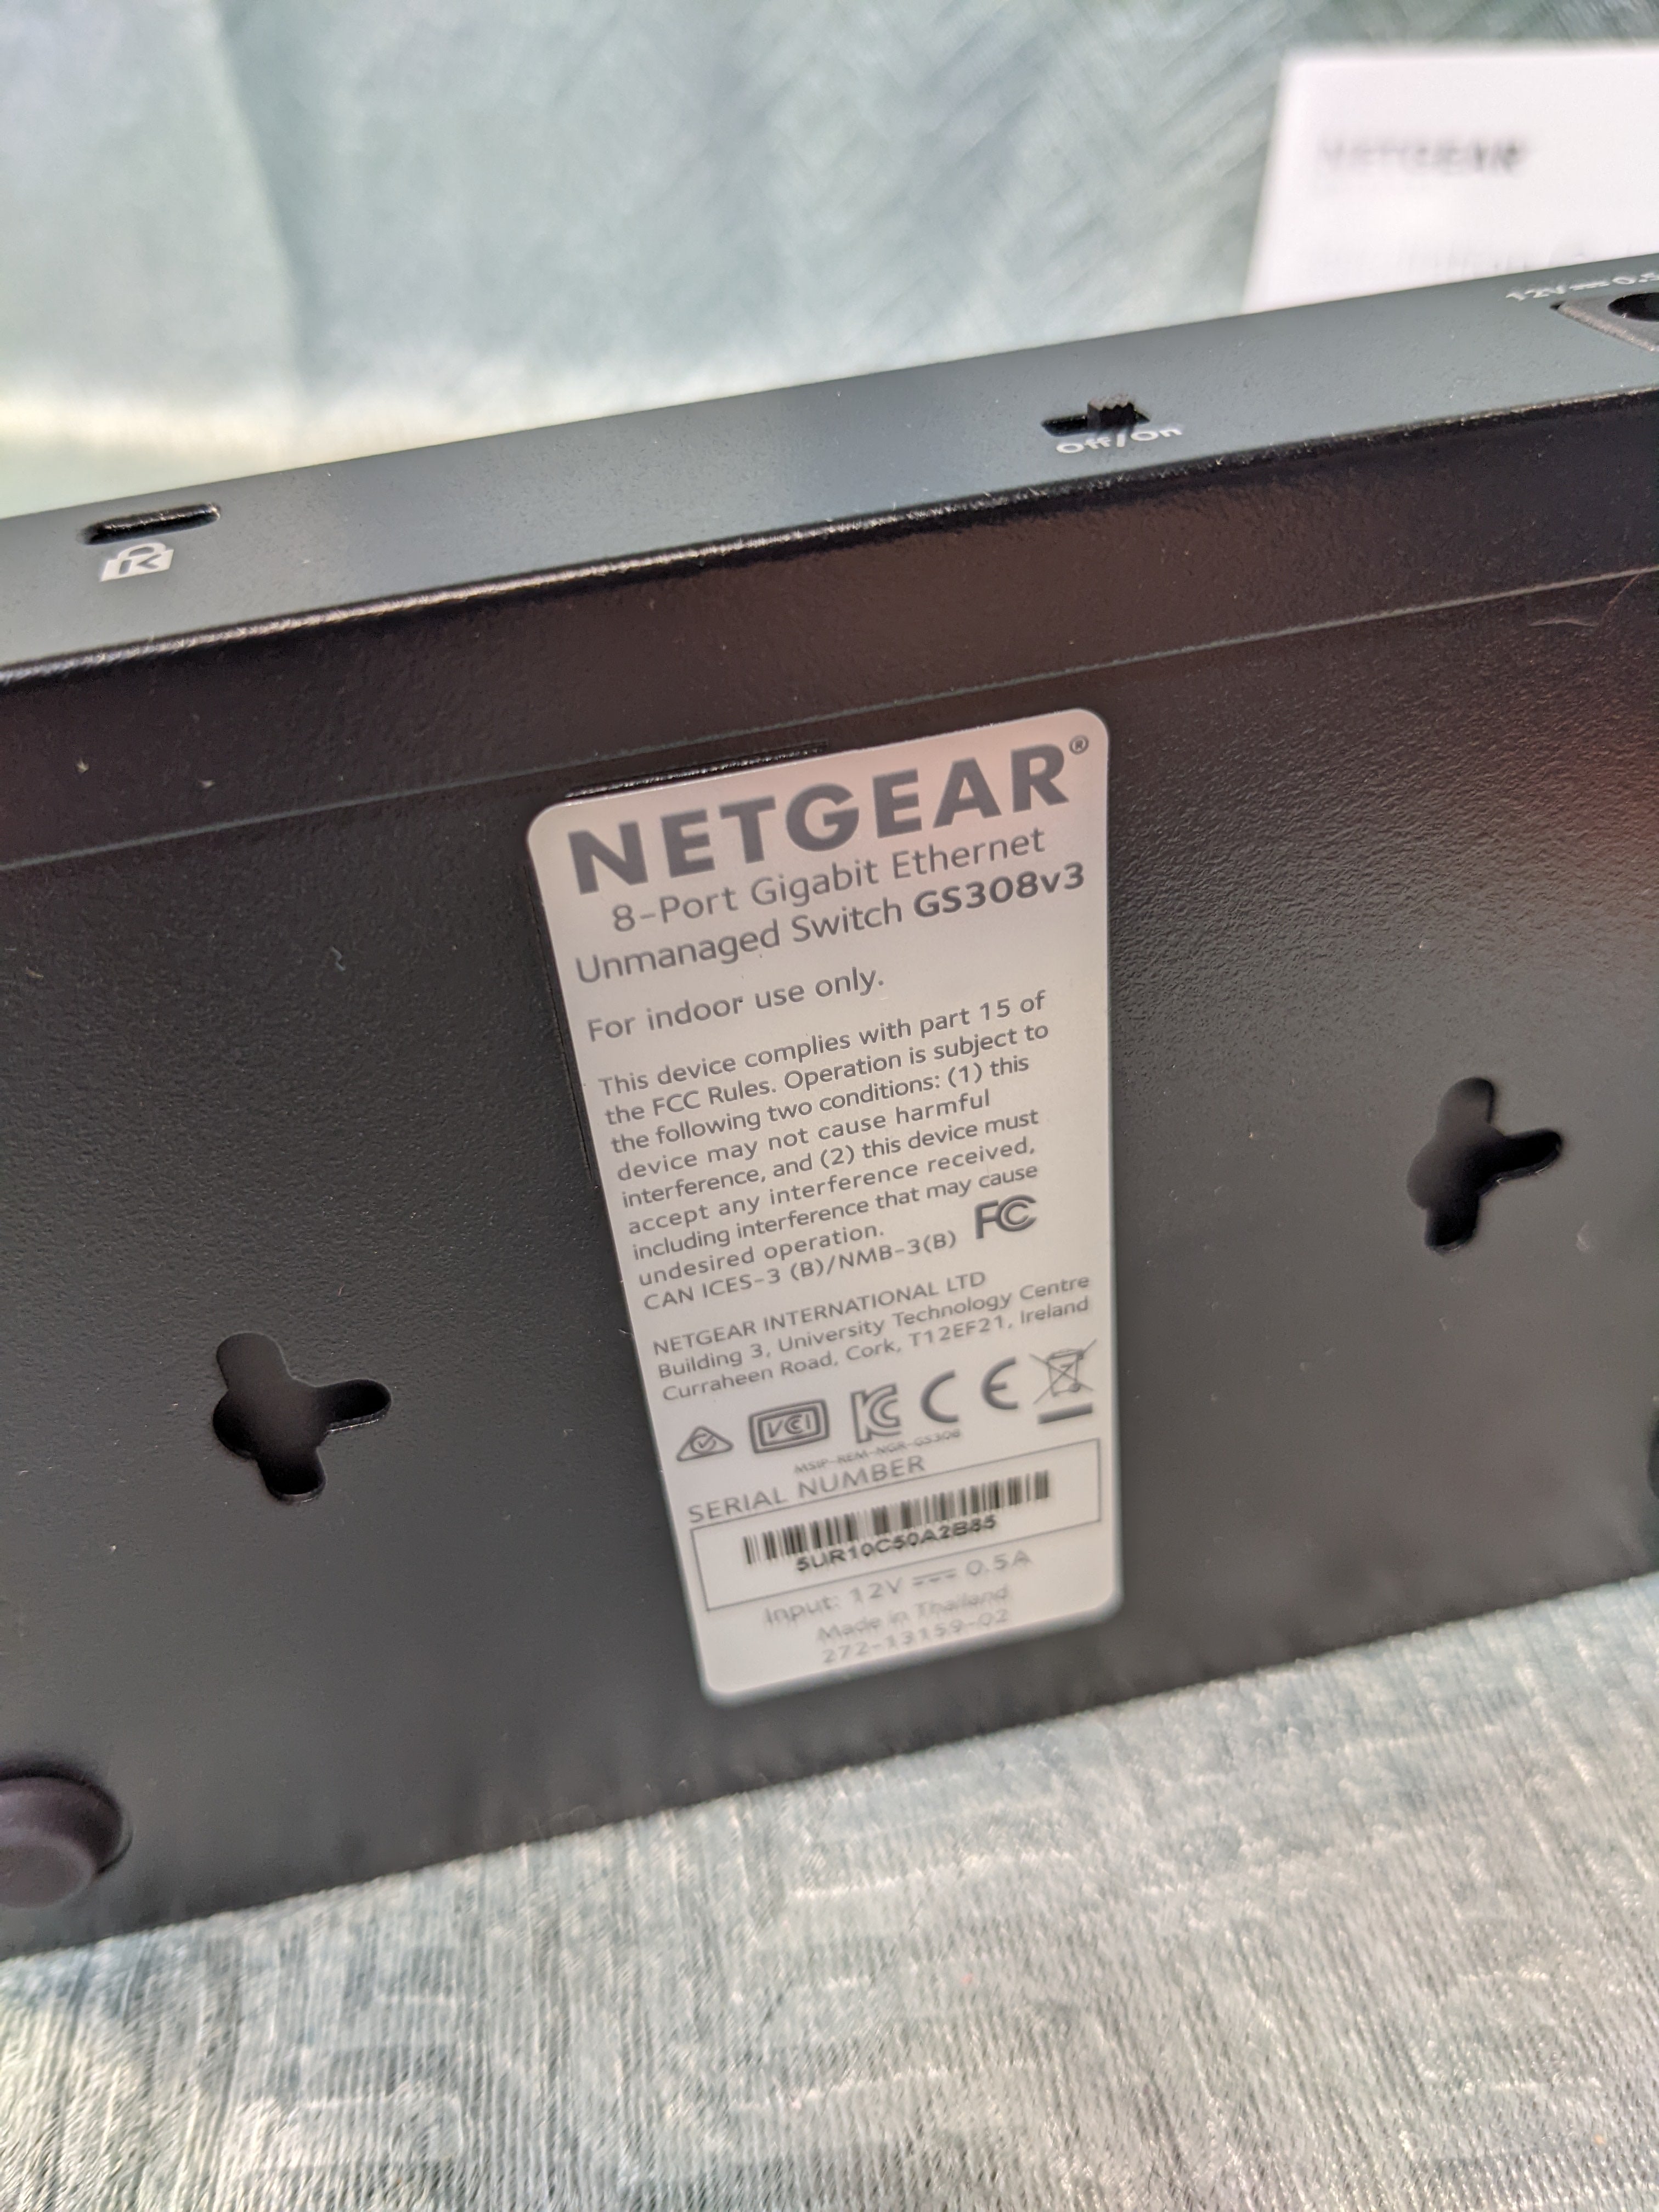 NETGEAR 8-Port Gigabit Ethernet Unmanaged Switch (GS308) - Home Network Hub, Office Ethernet Splitter (7593143927022)